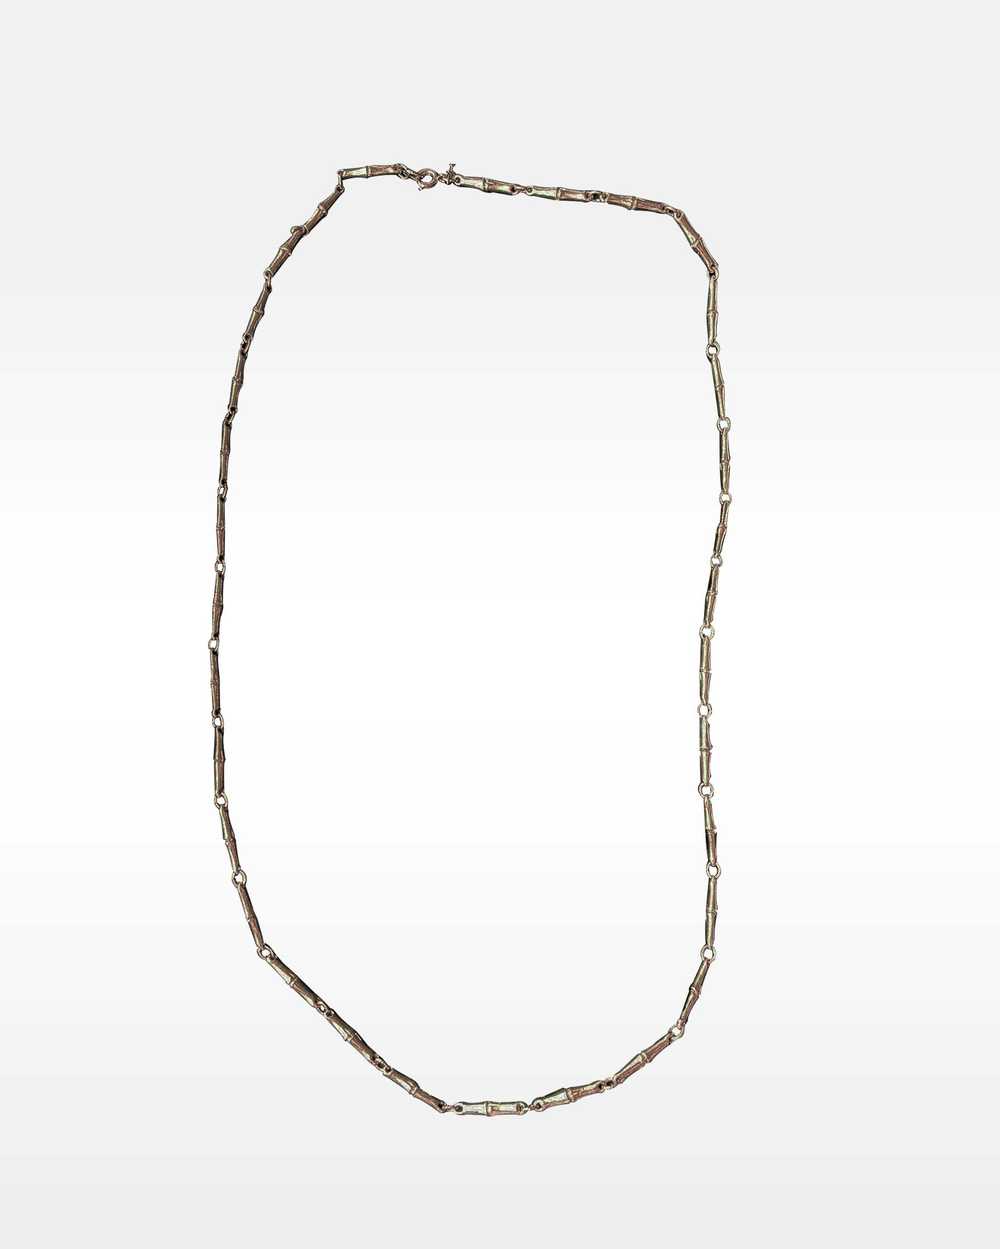 Trifari Bamboo Link Gold Metal Necklace - image 4